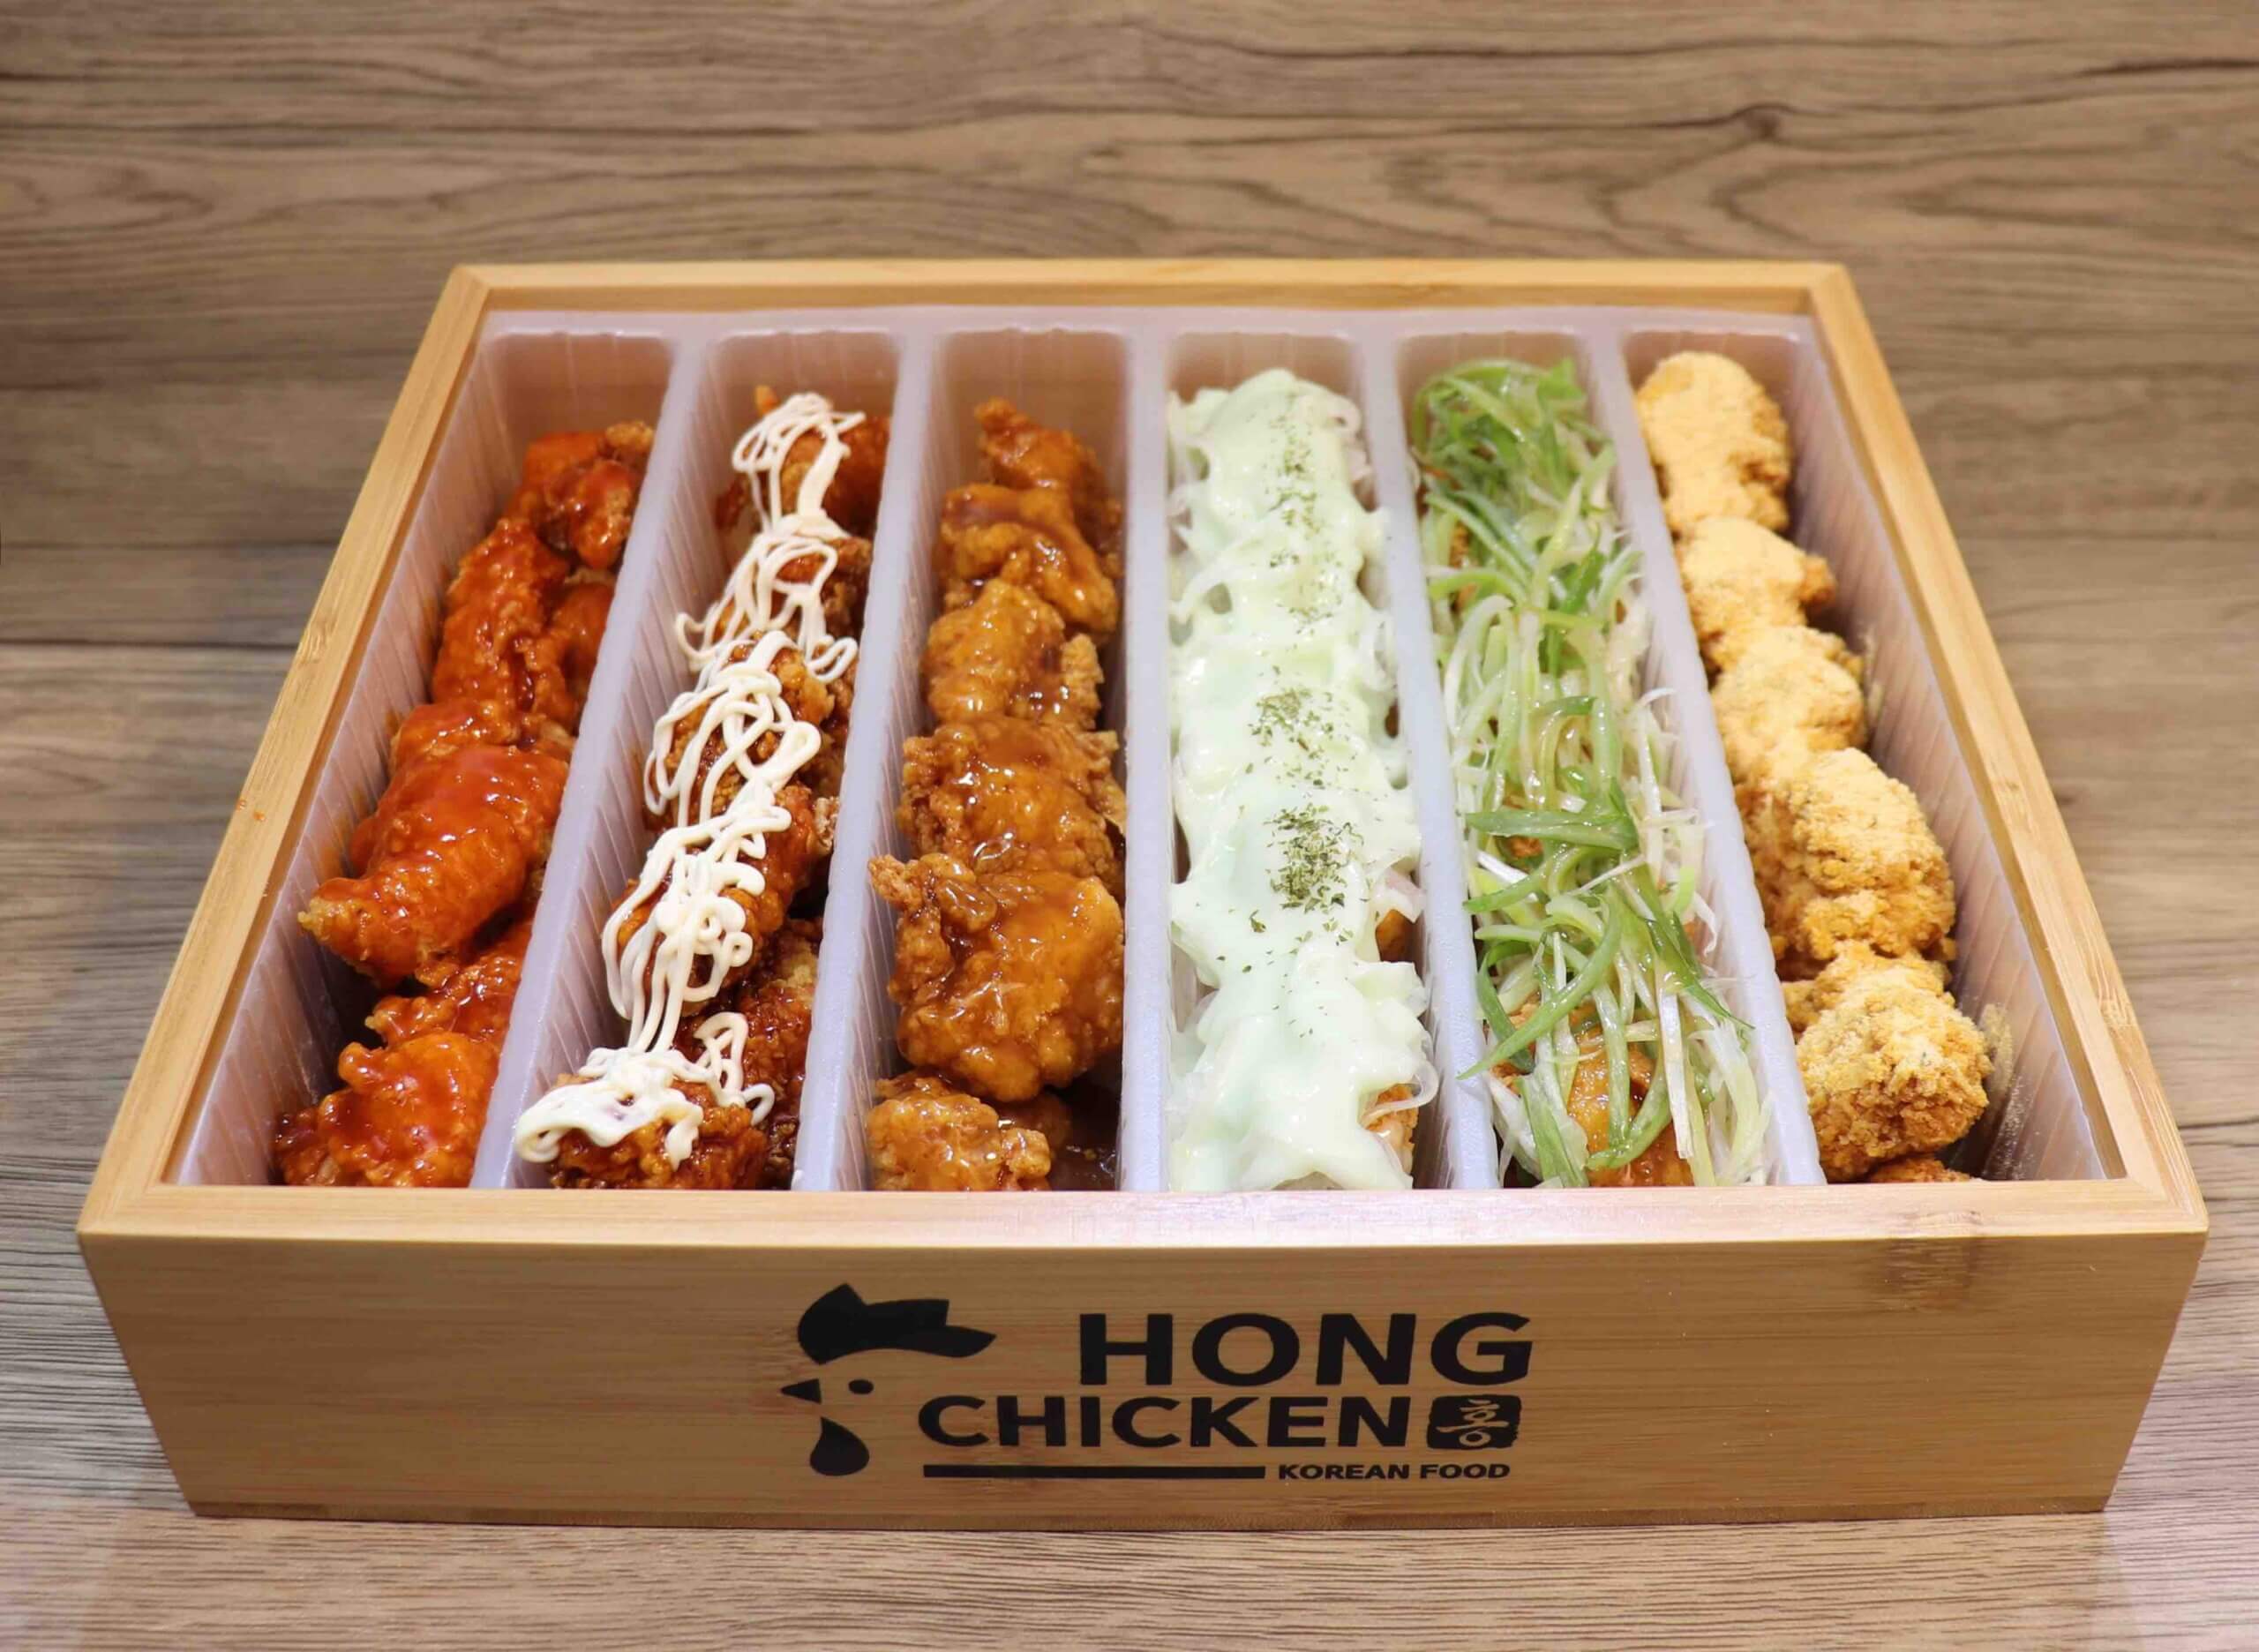 Hong Korean Chicken特許經營及加盟資料